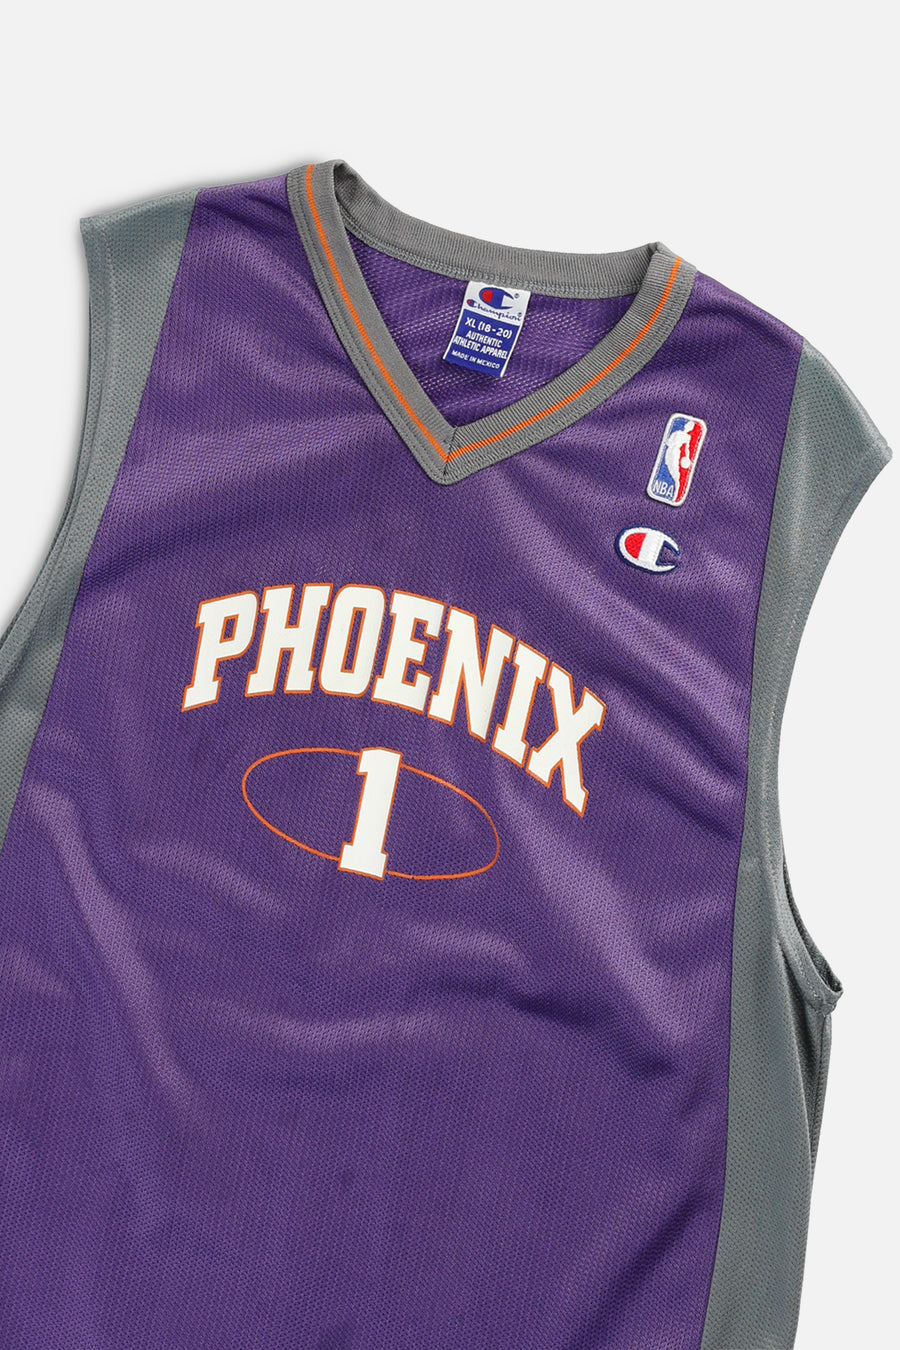 Vintage Phoenix Suns NBA Jersey - Women's M